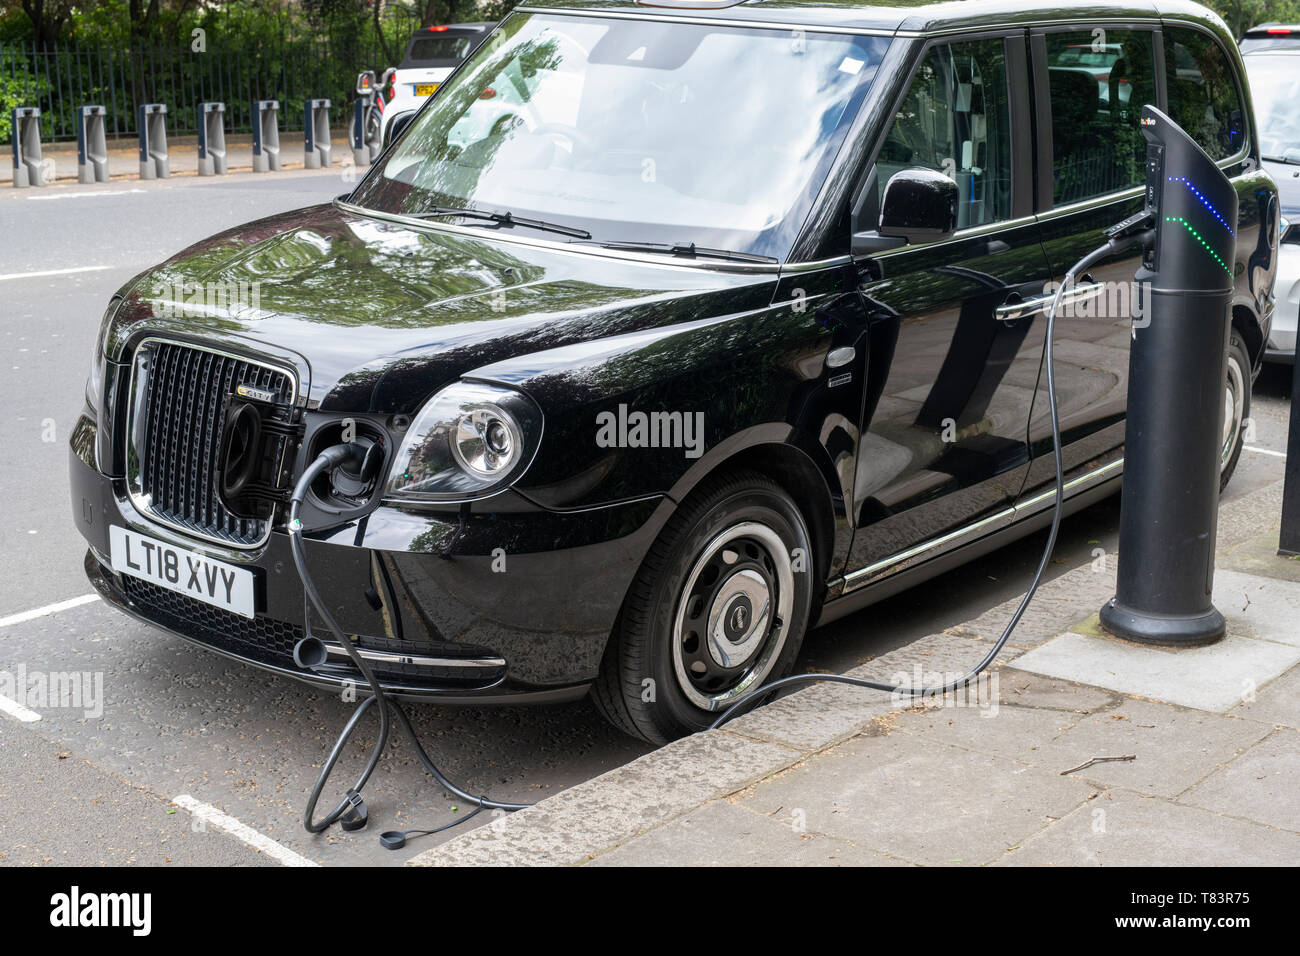 La carga eléctrica de un taxi de Londres en la calle. Londres, Inglaterra Foto de stock